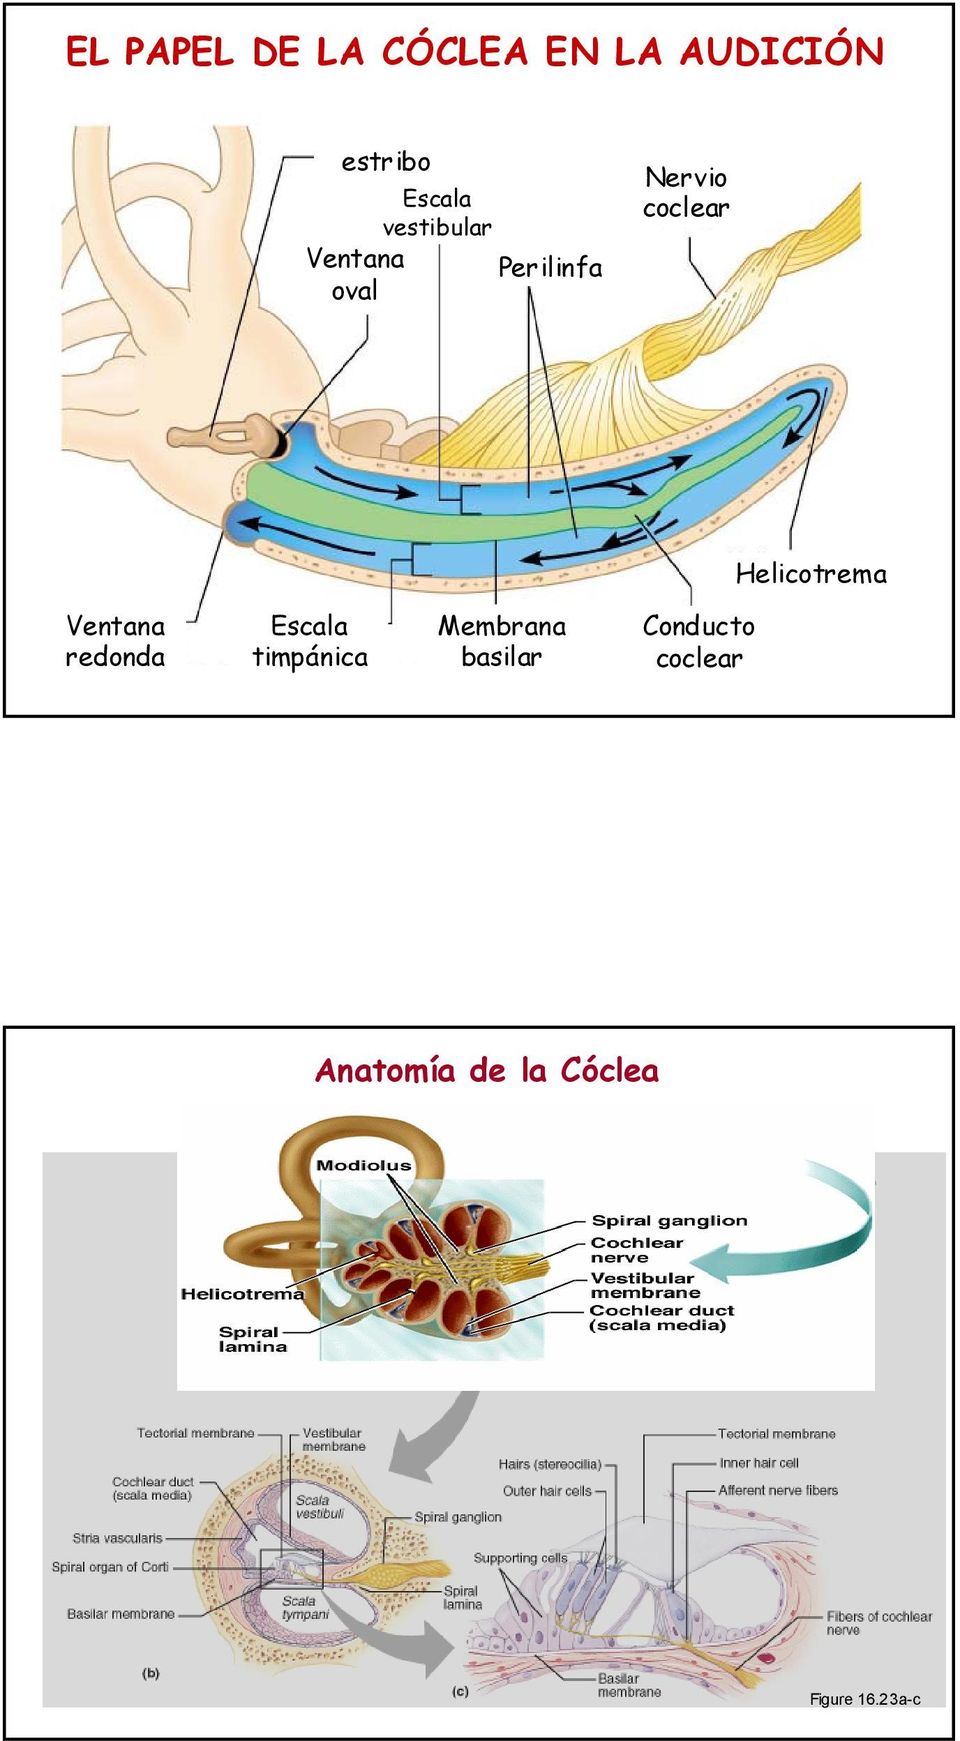 Ventana redonda Escala timpánica Membrana basilar Conducto